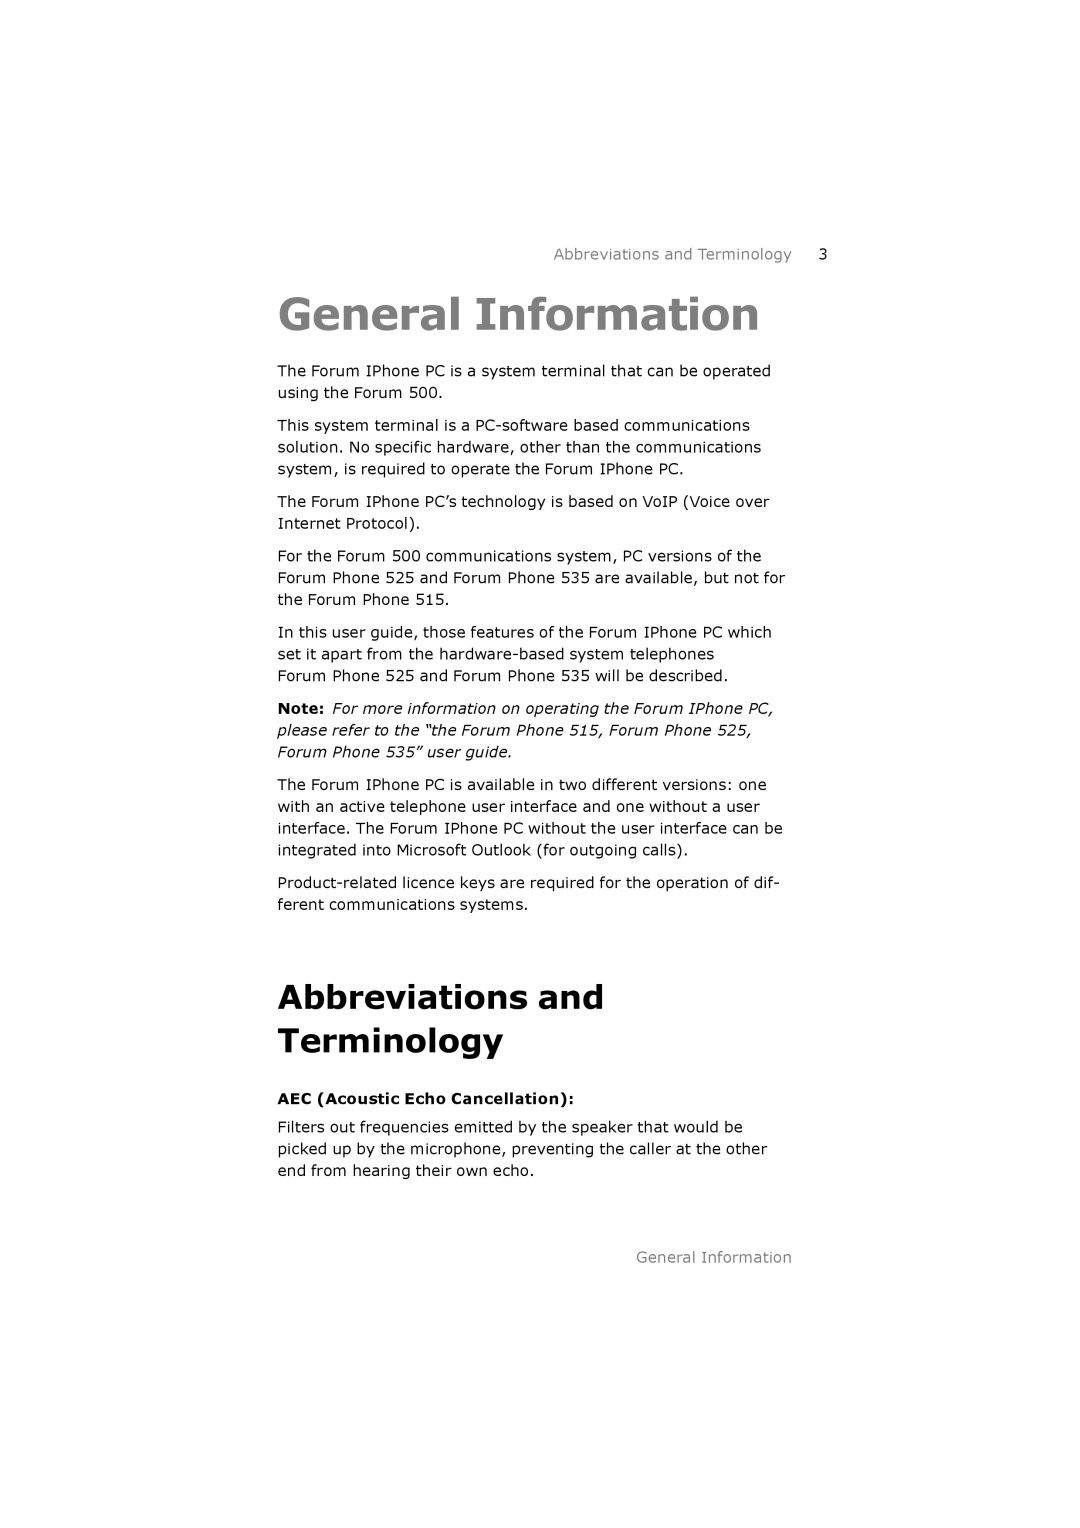 Belgacom 500 manual General Information, Abbreviations Terminology, AEC Acoustic Echo Cancellation 